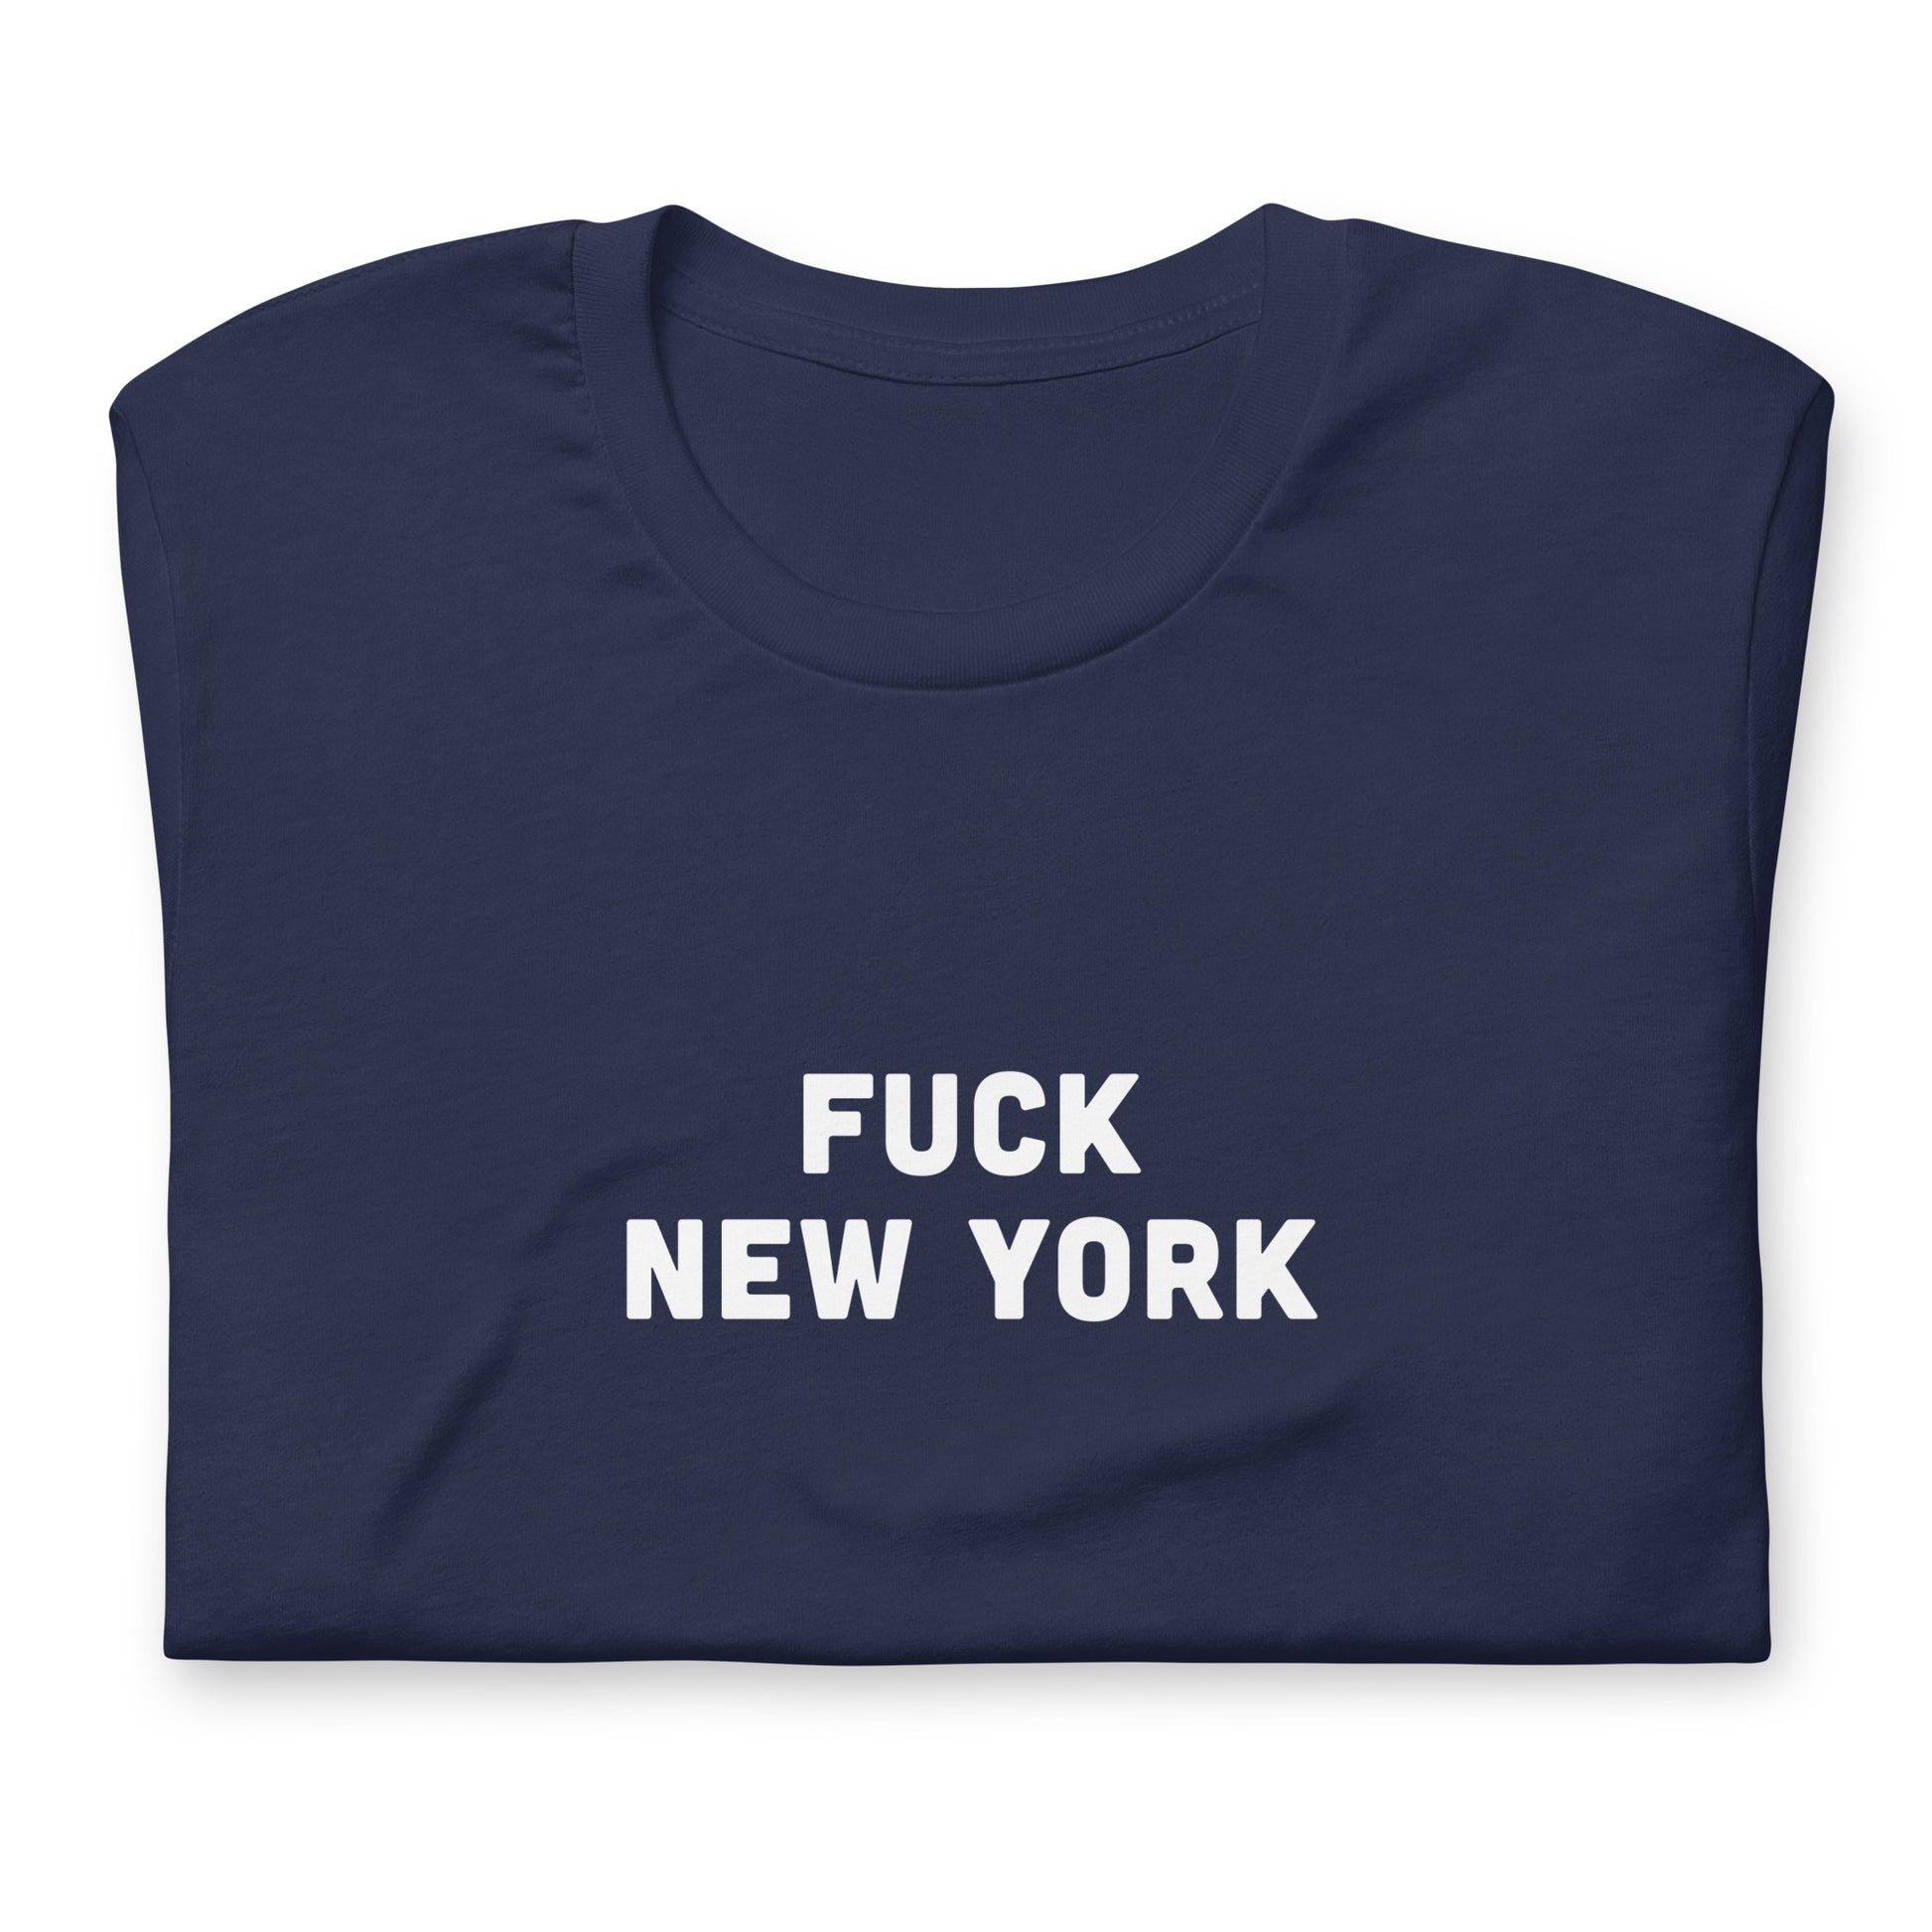 Fuck New York T-Shirt Size XL Color Black